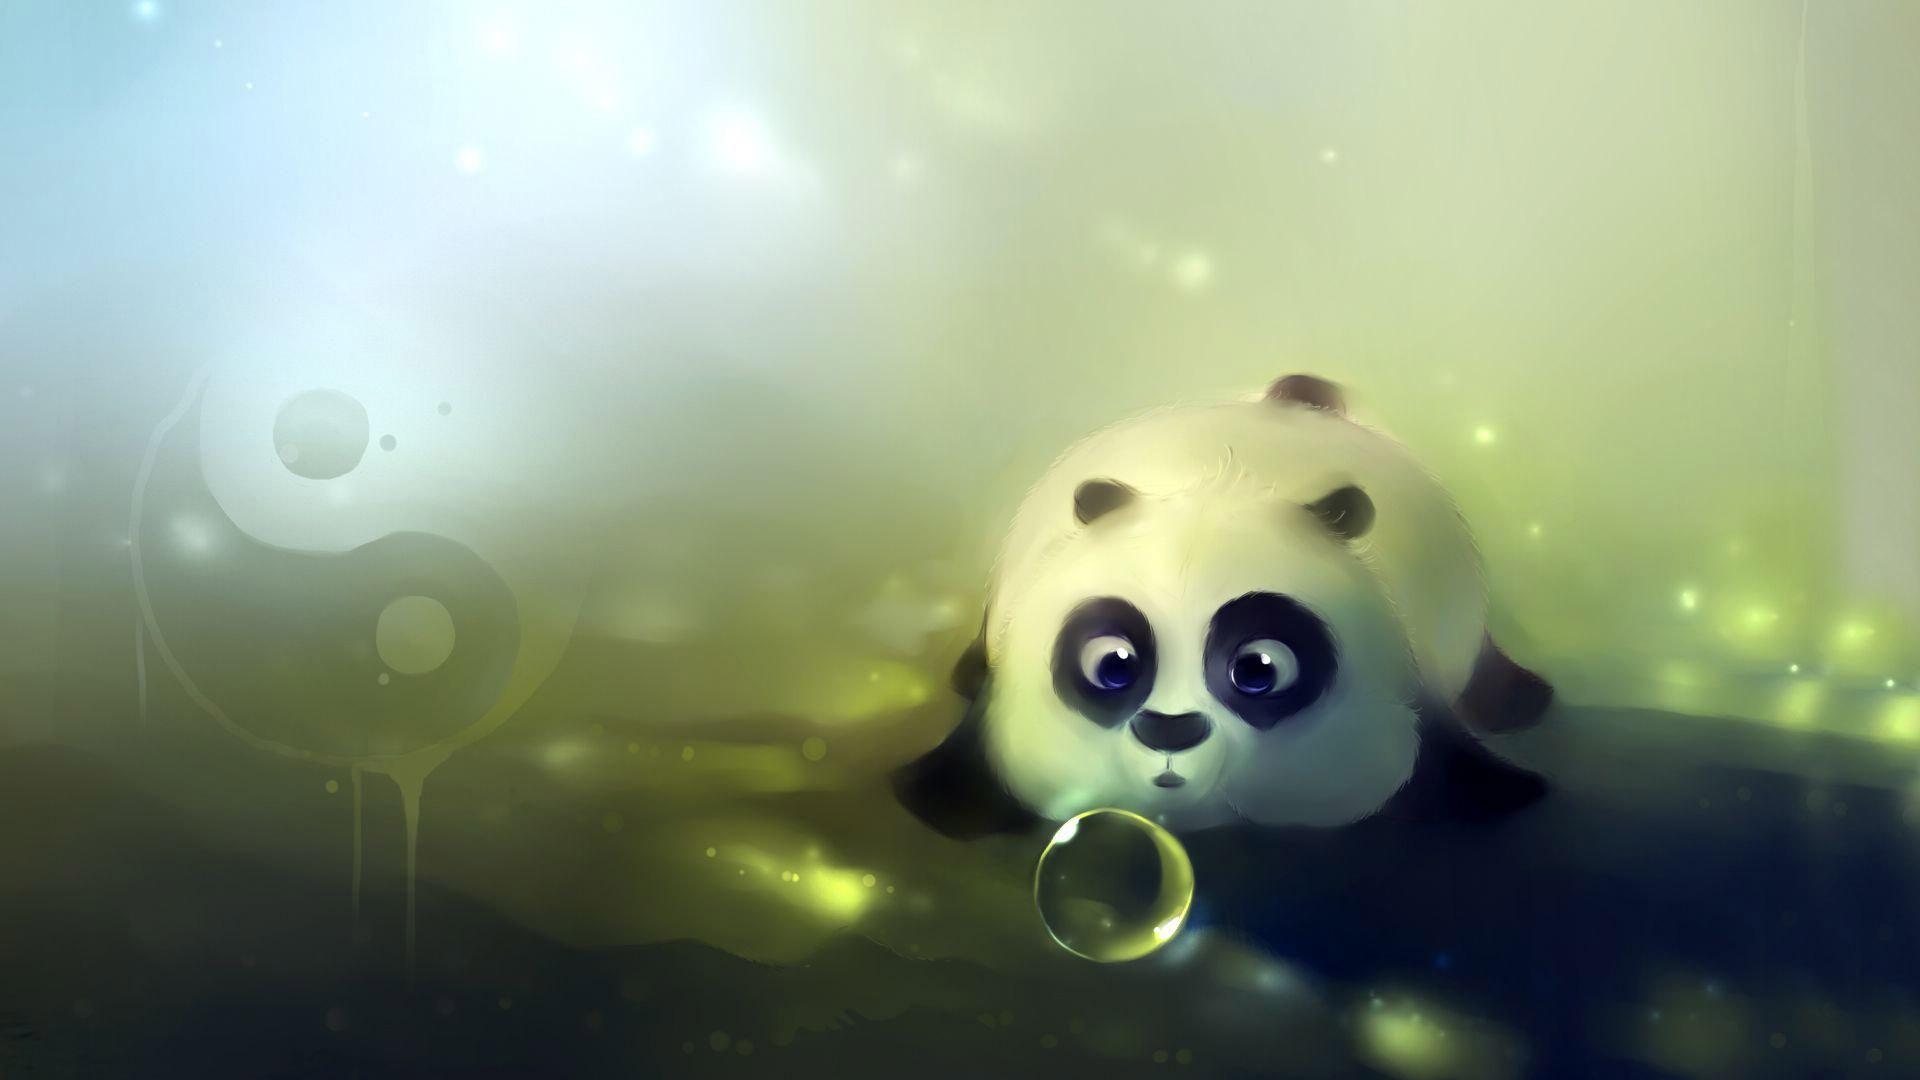 Wallpaper.wiki Cartoon Panda Looks Cute Image In 3D PIC WPD009513